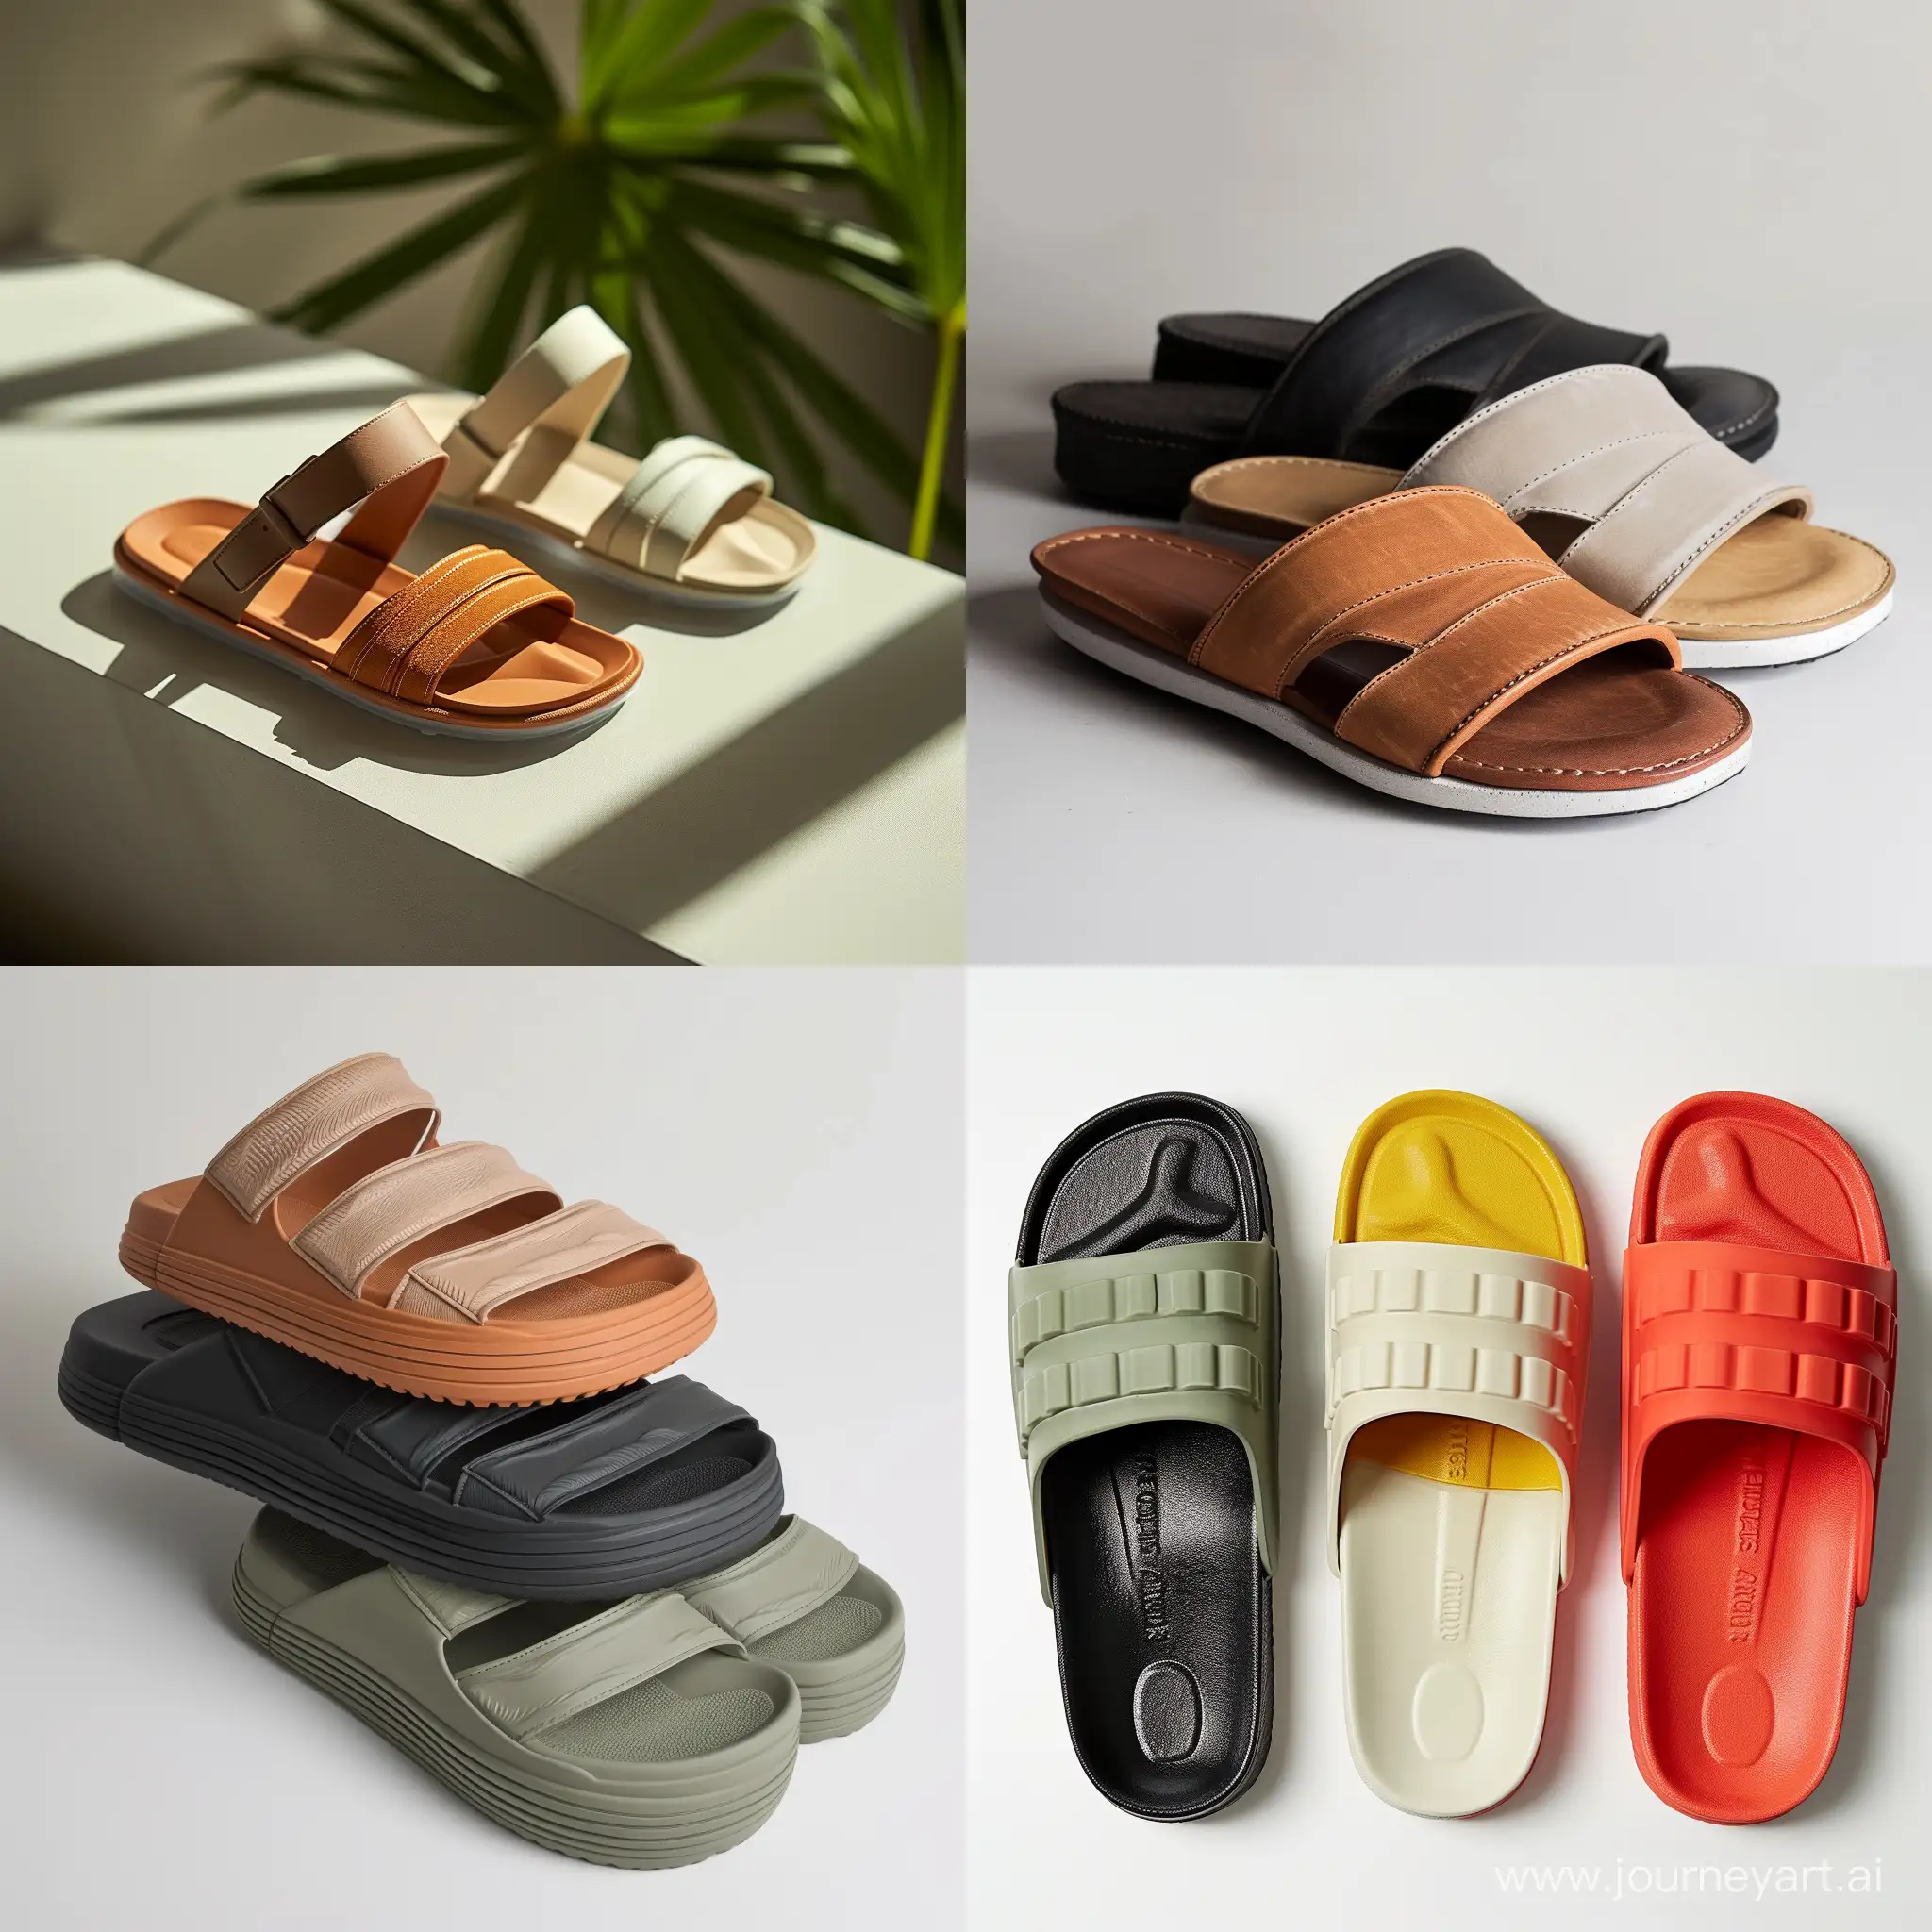 Artistic-Layers-of-Sandals-Versatile-and-Elegant-Footwear